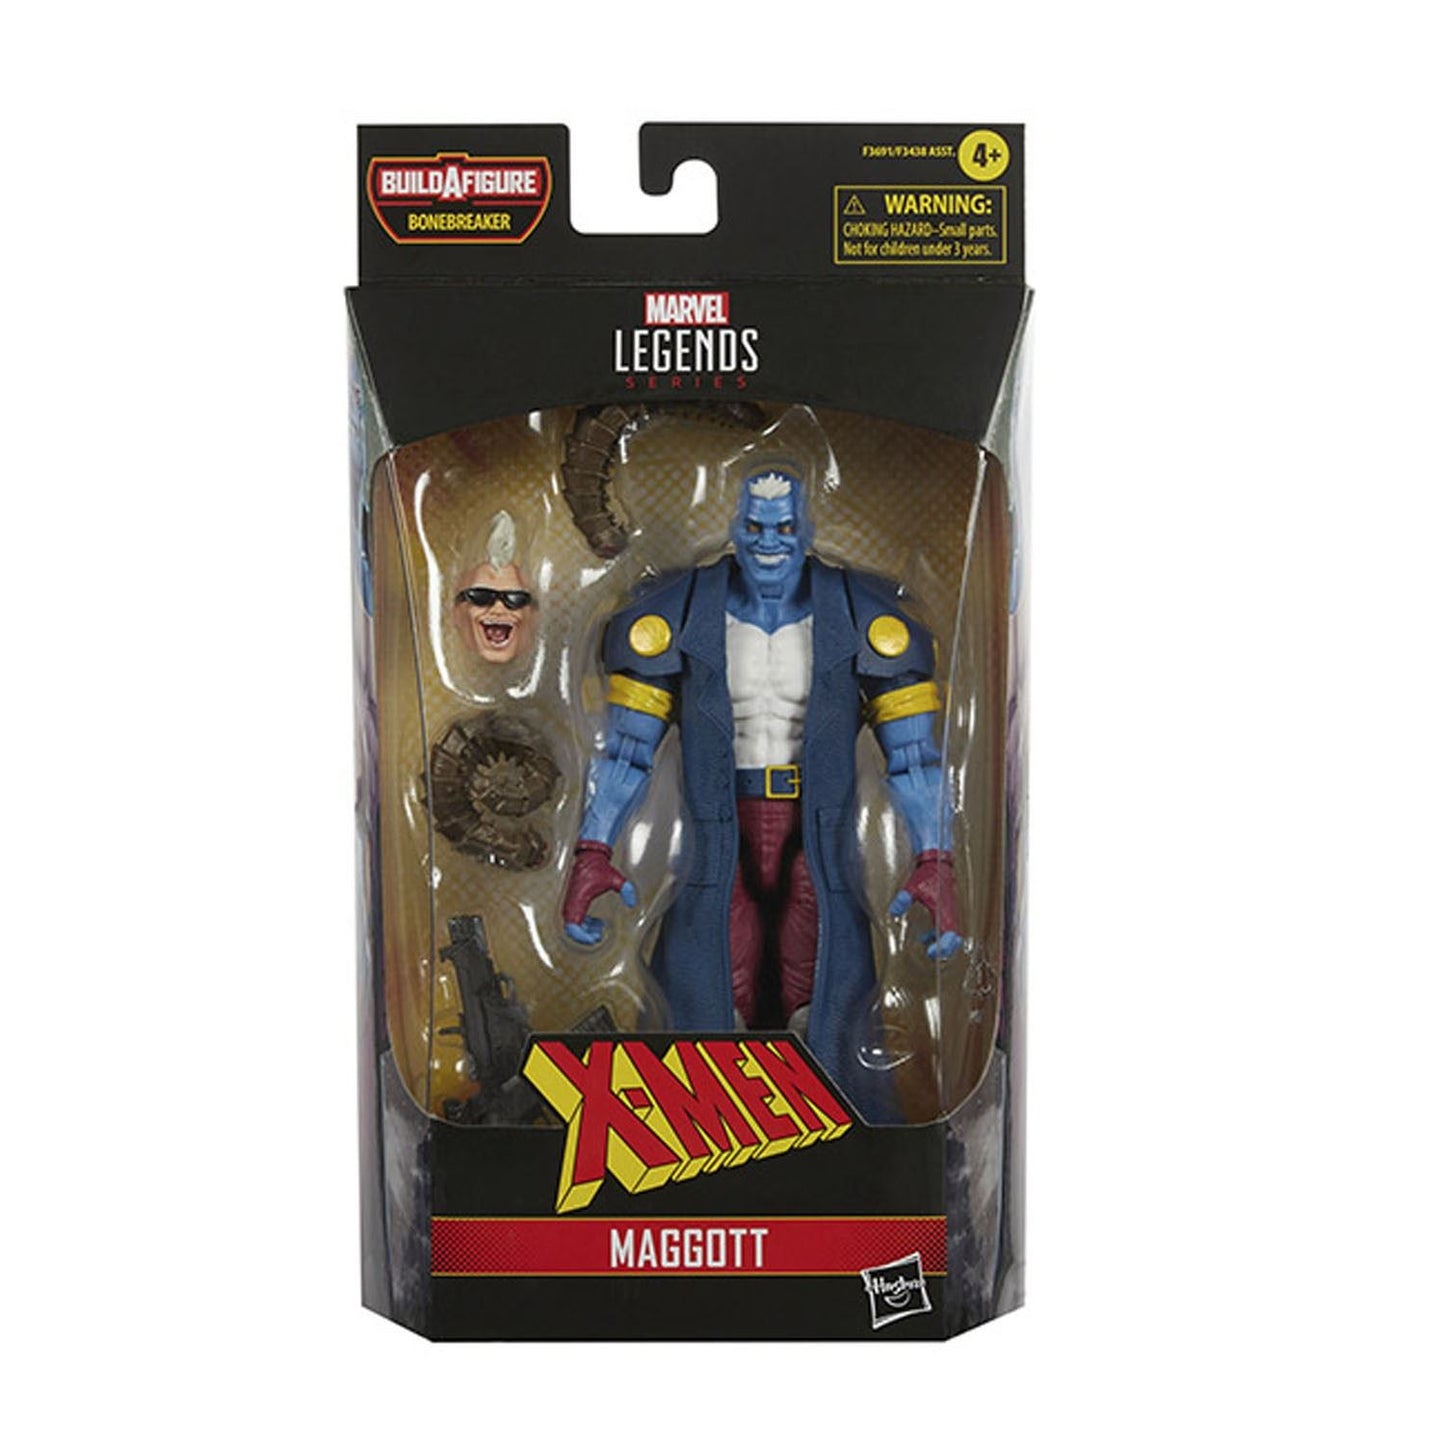 MAGGOTT X-Men Action Figure Build-A-Figure F3691 Marvel Toys Legends Series